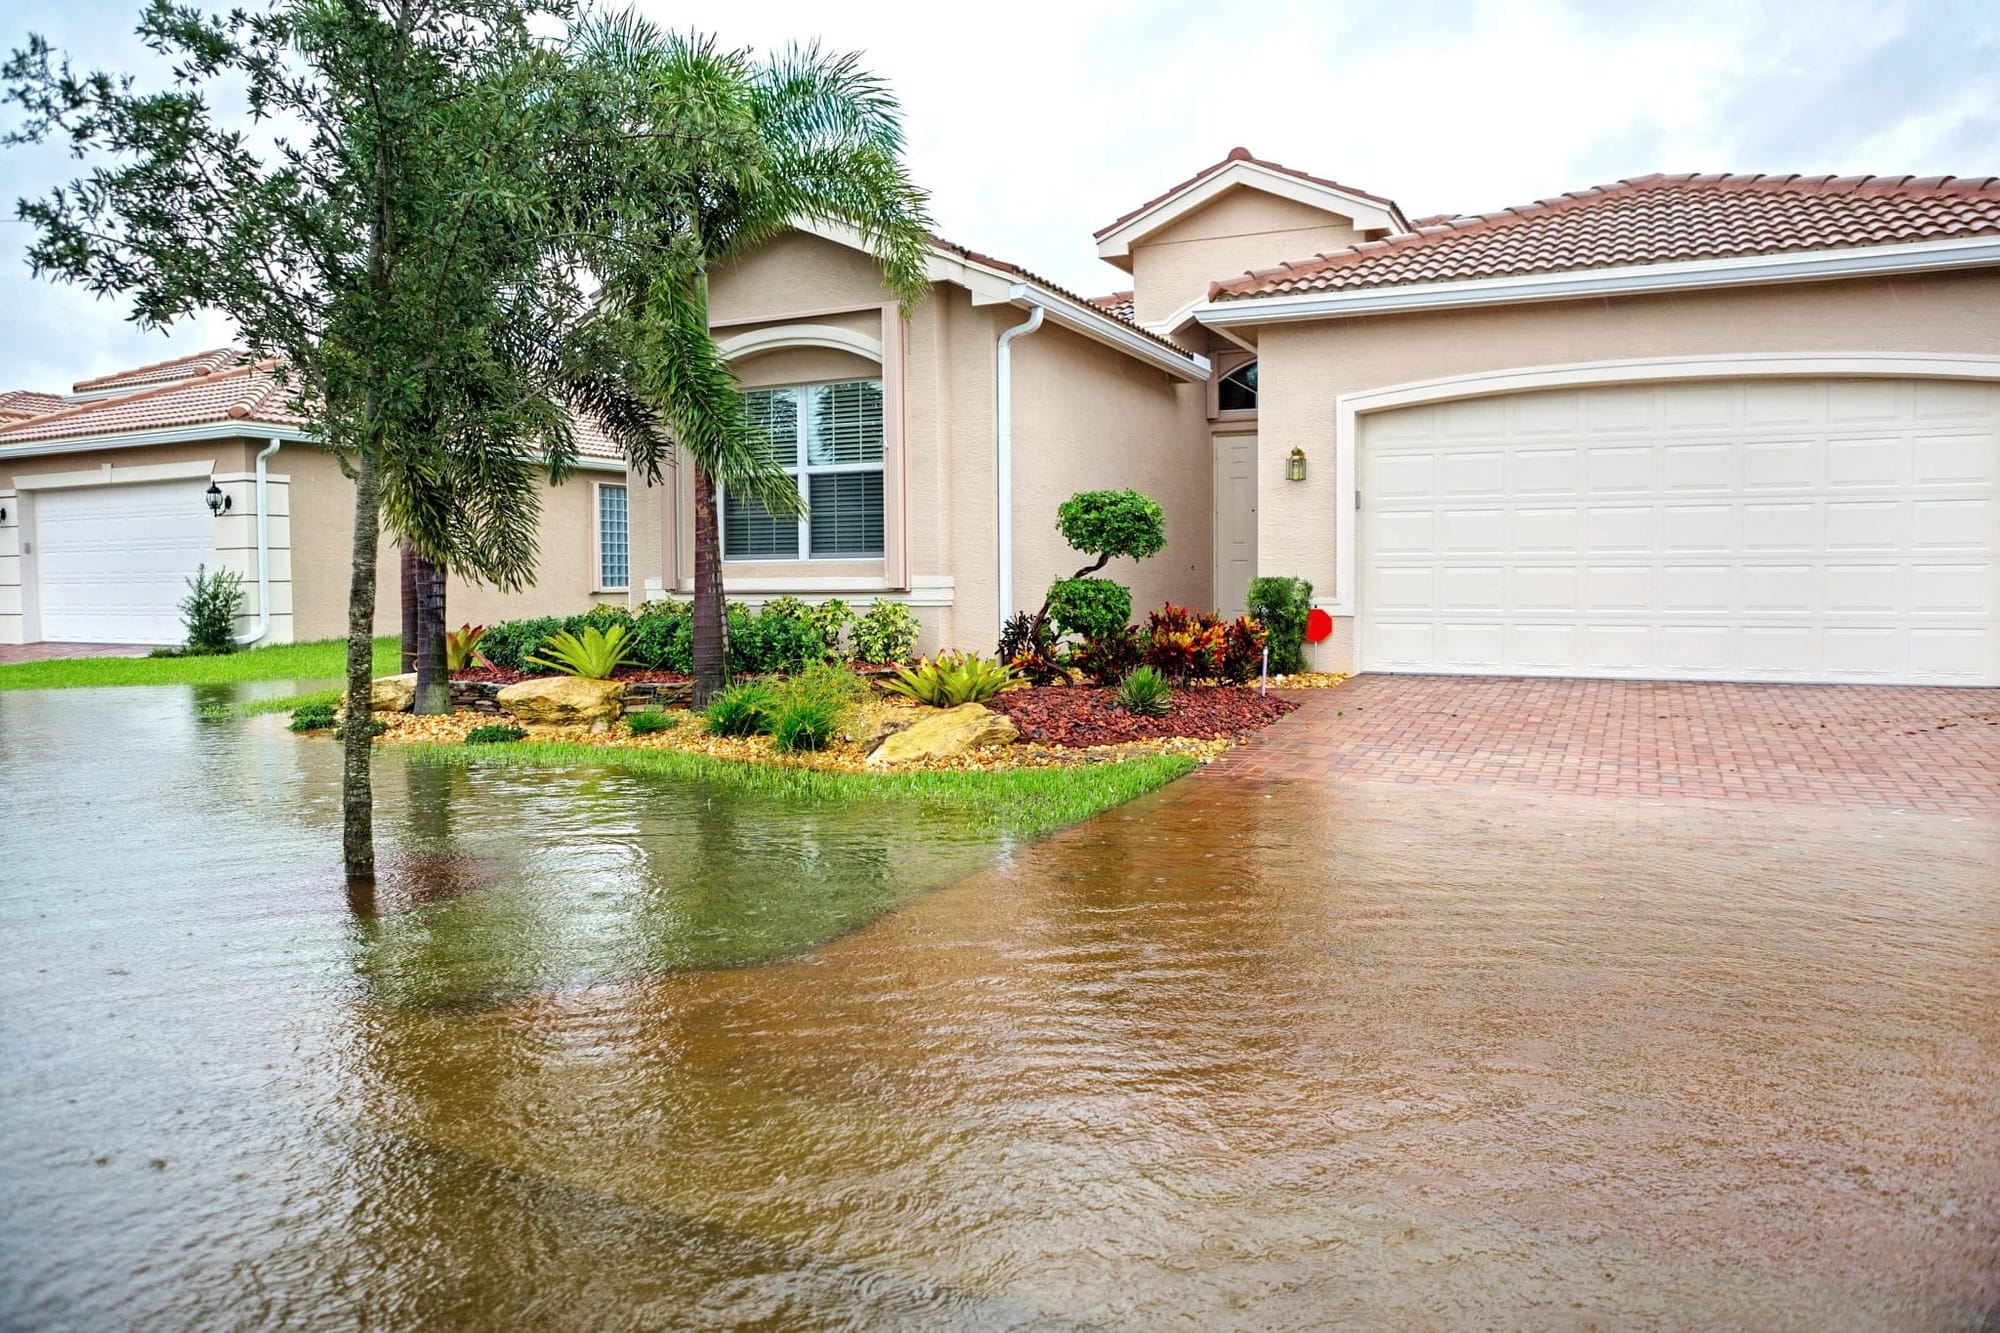 Importance of Flood Insurance